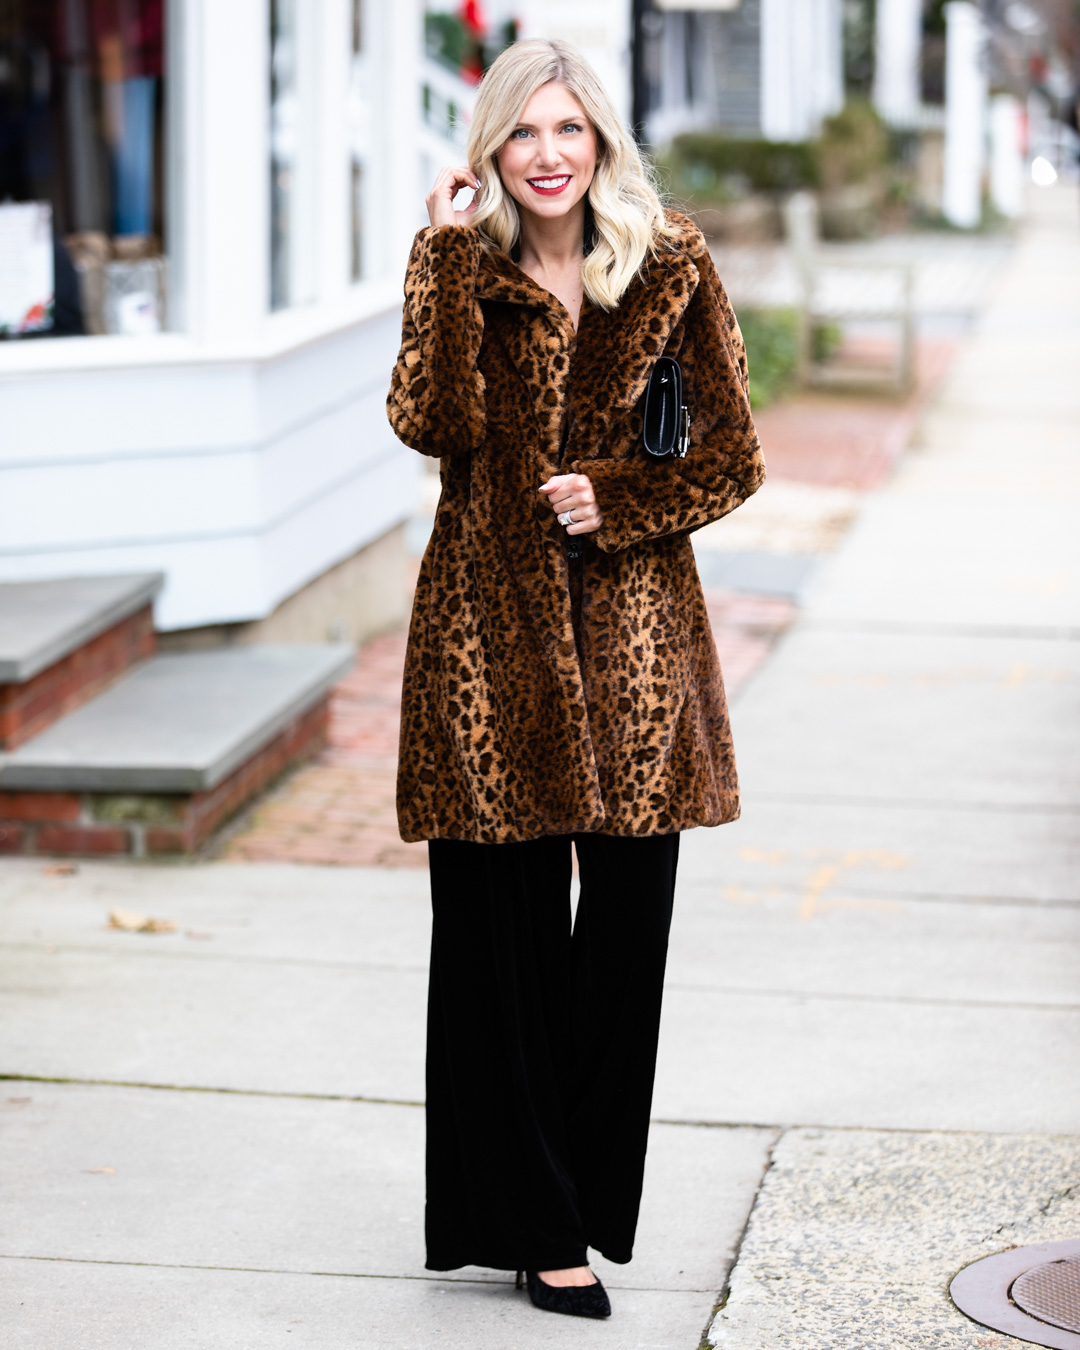 Kensie Velvet Jumpsuit and Leopard Jacket